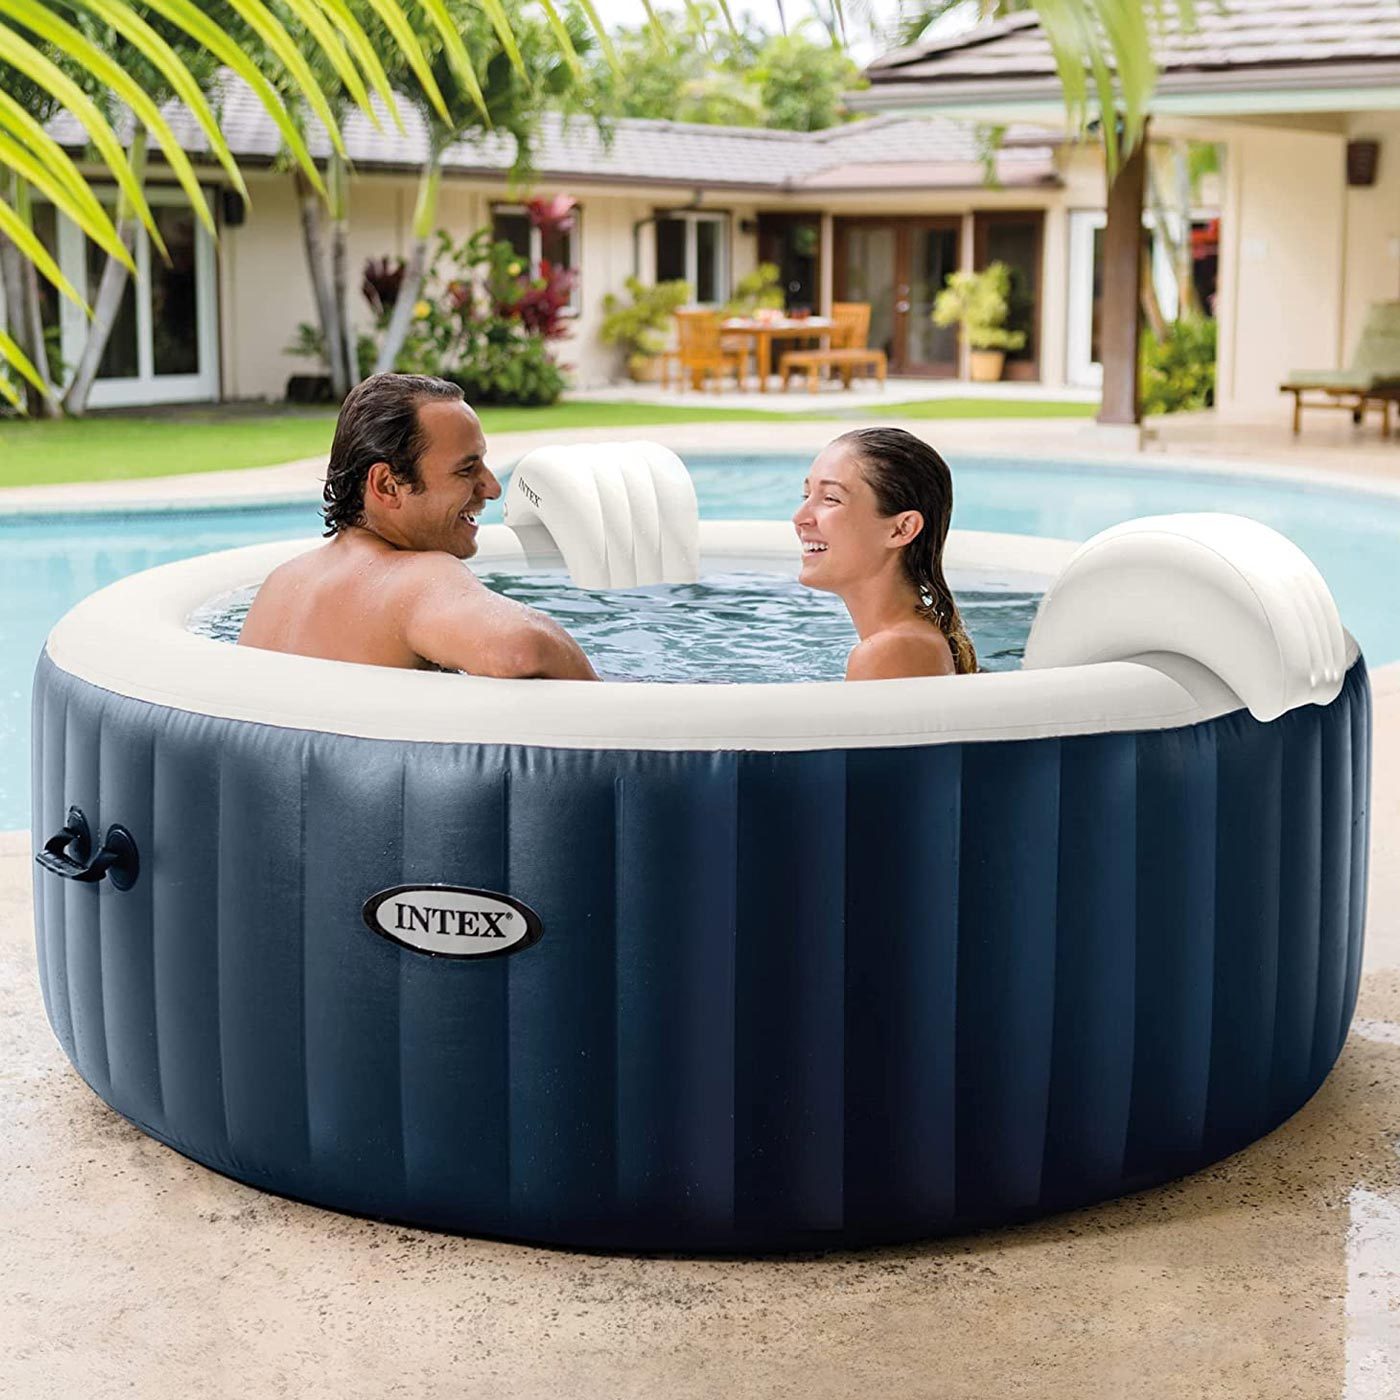 6 Best Inflatable Hot Tub Picks